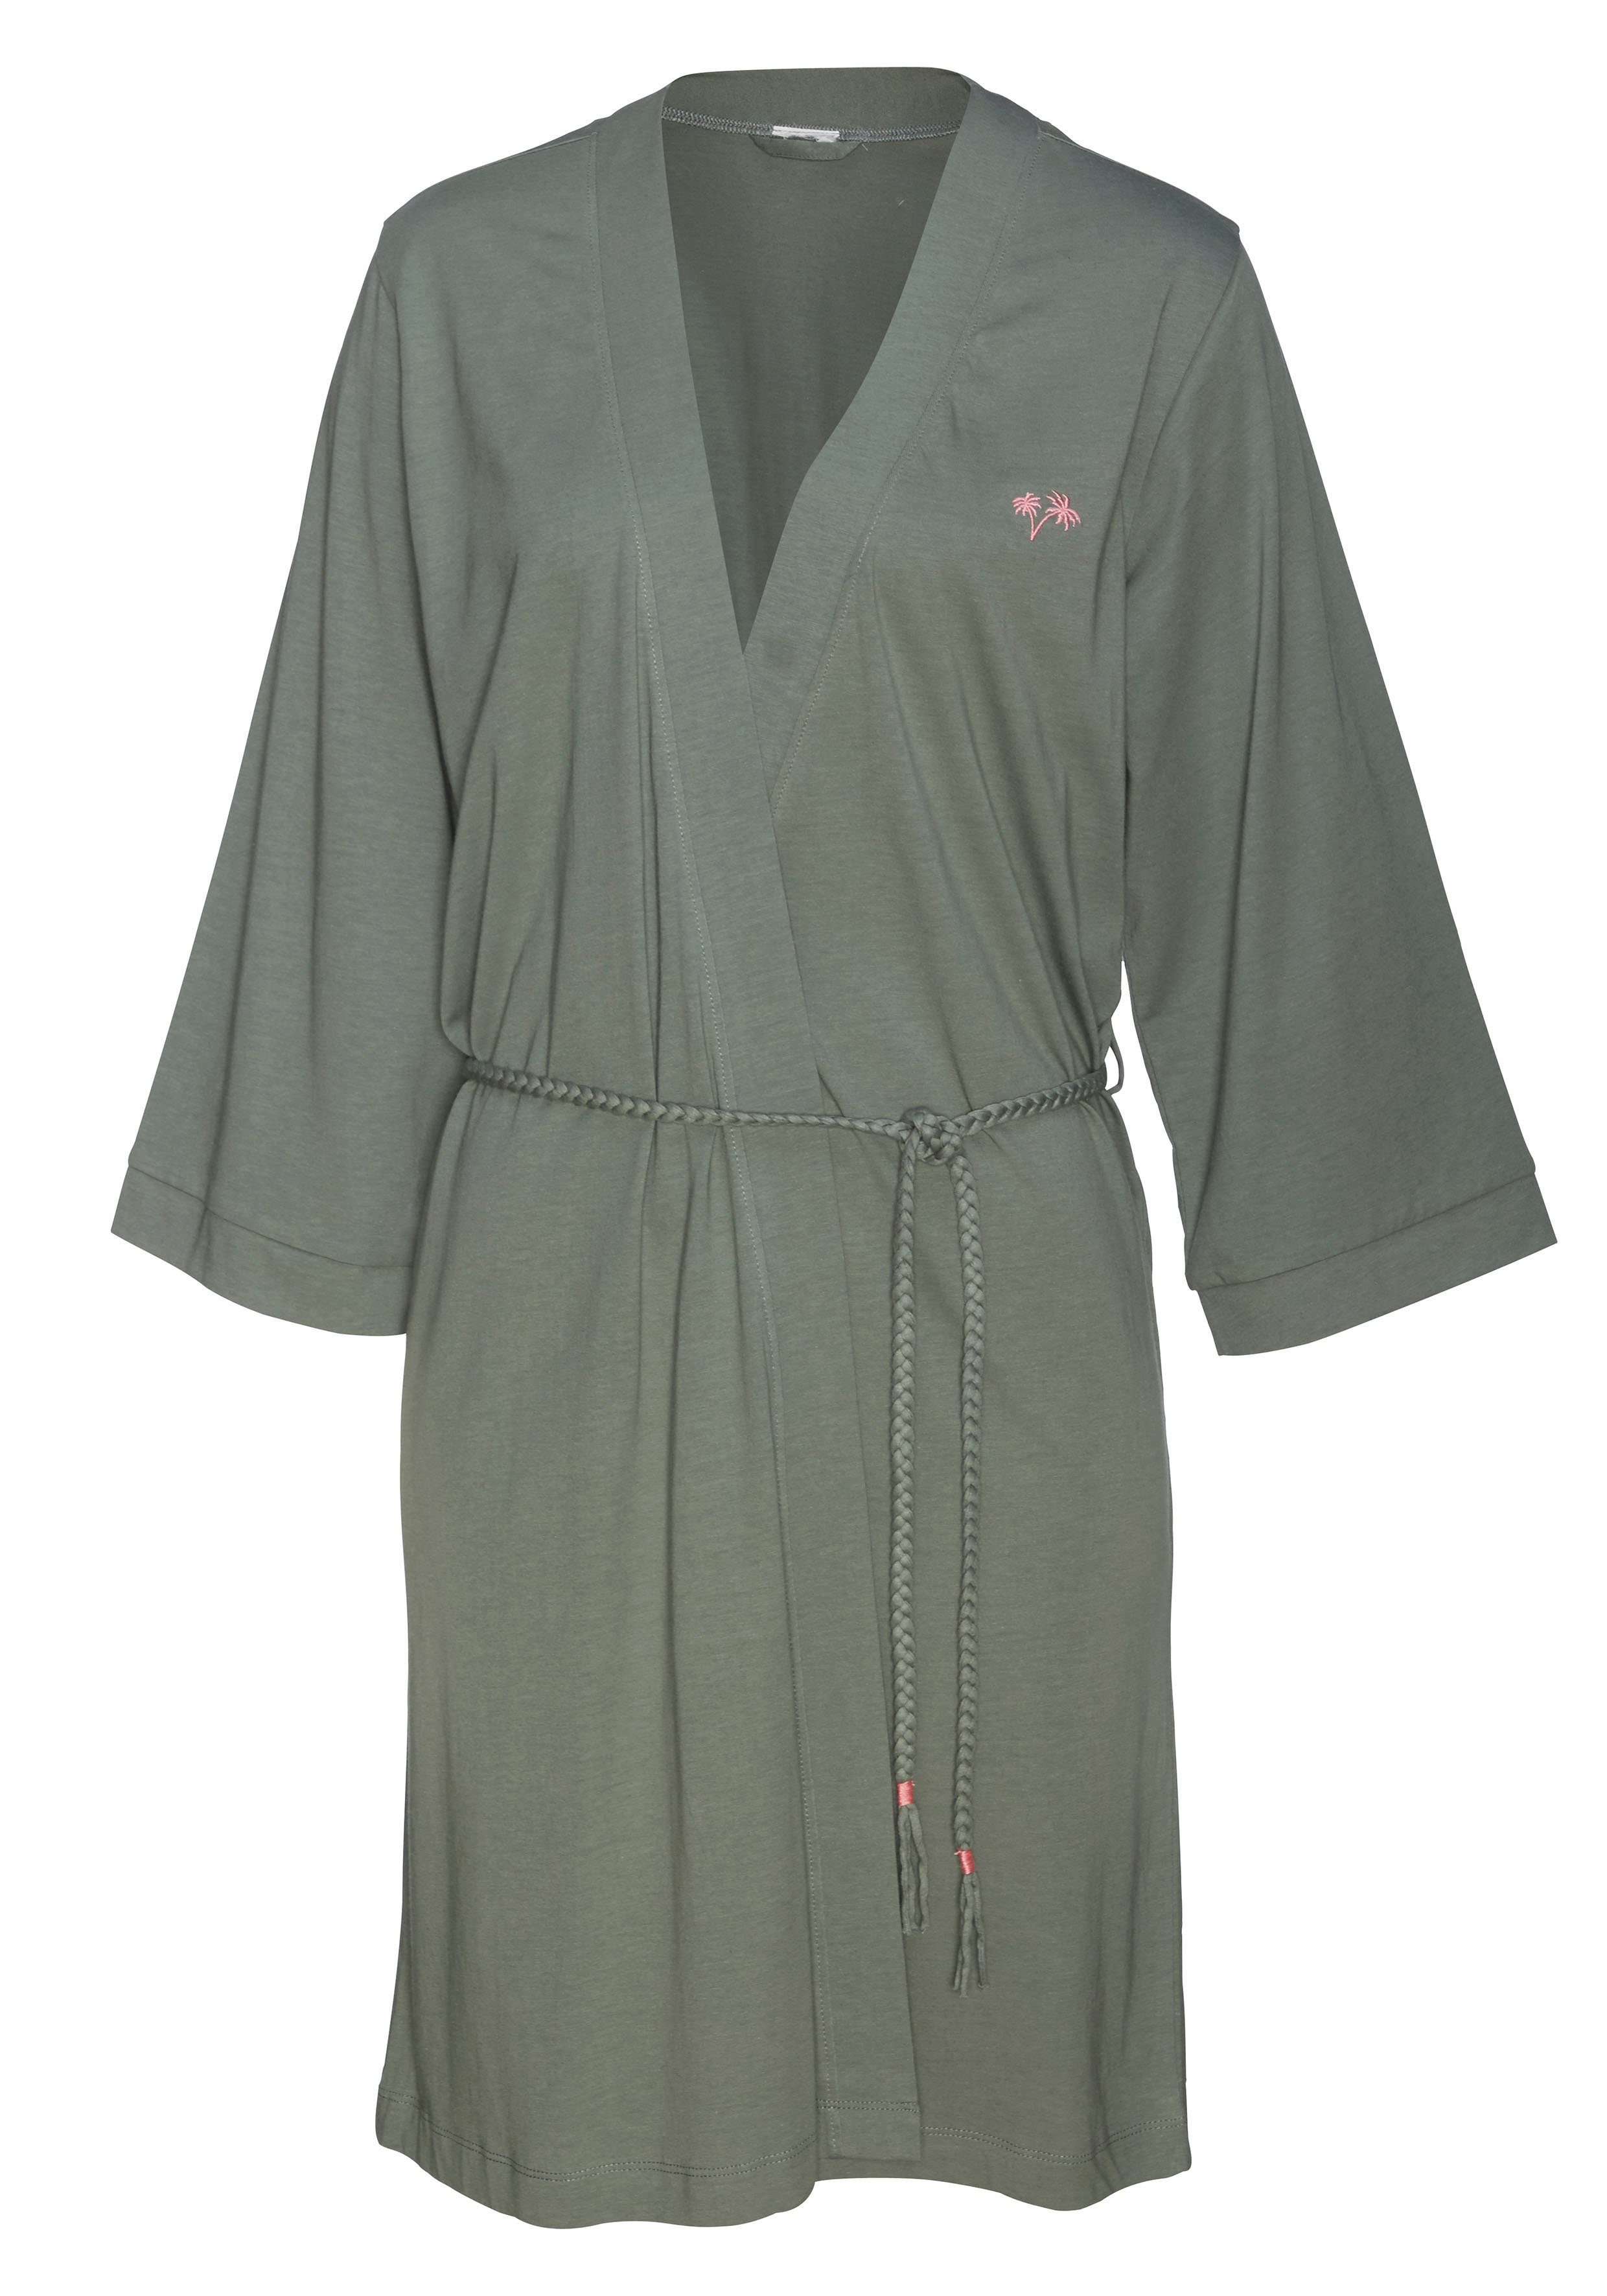 Vivance Dreams Kurzform, Kimono, floralem oder Kimono-Kragen, mit khaki Baumwoll-Mix, uni Druck Gürtel